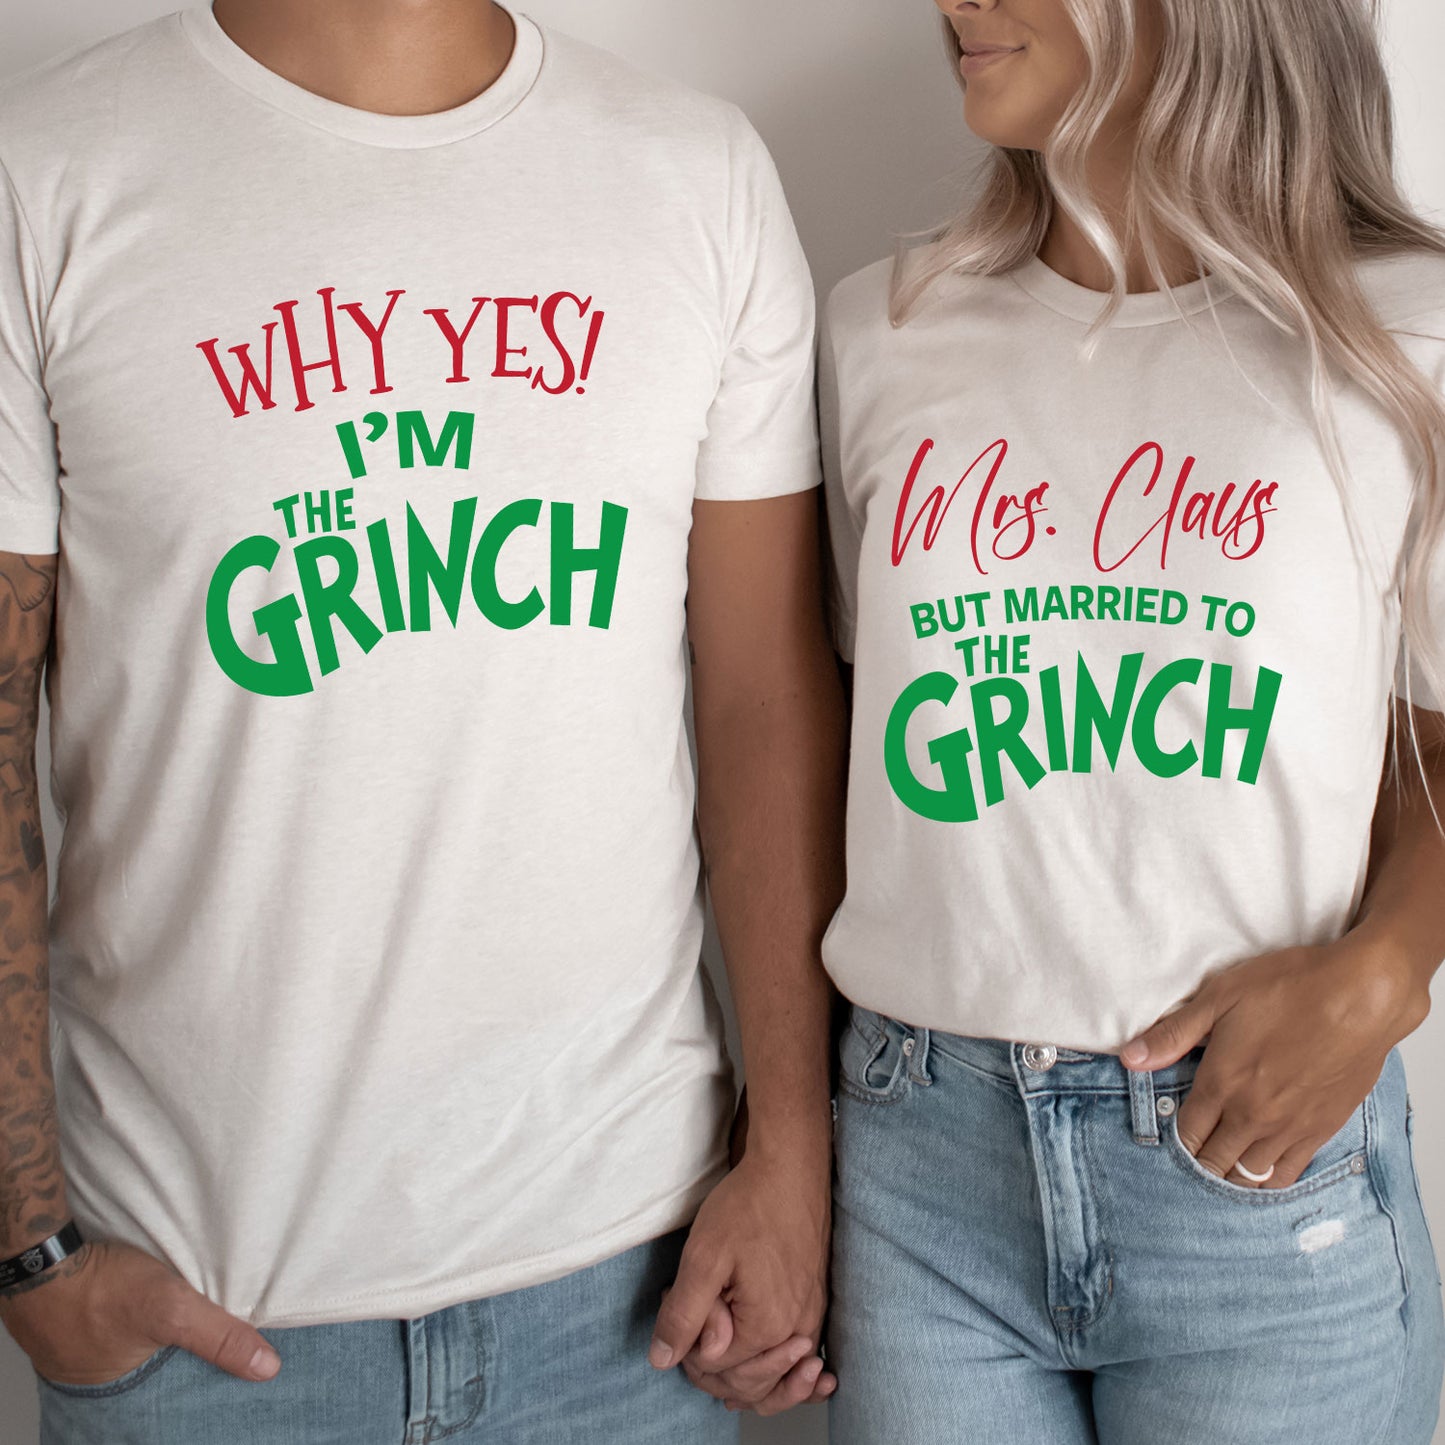 ORIGINAL Formula- Grinch Couple (Sold Separately)